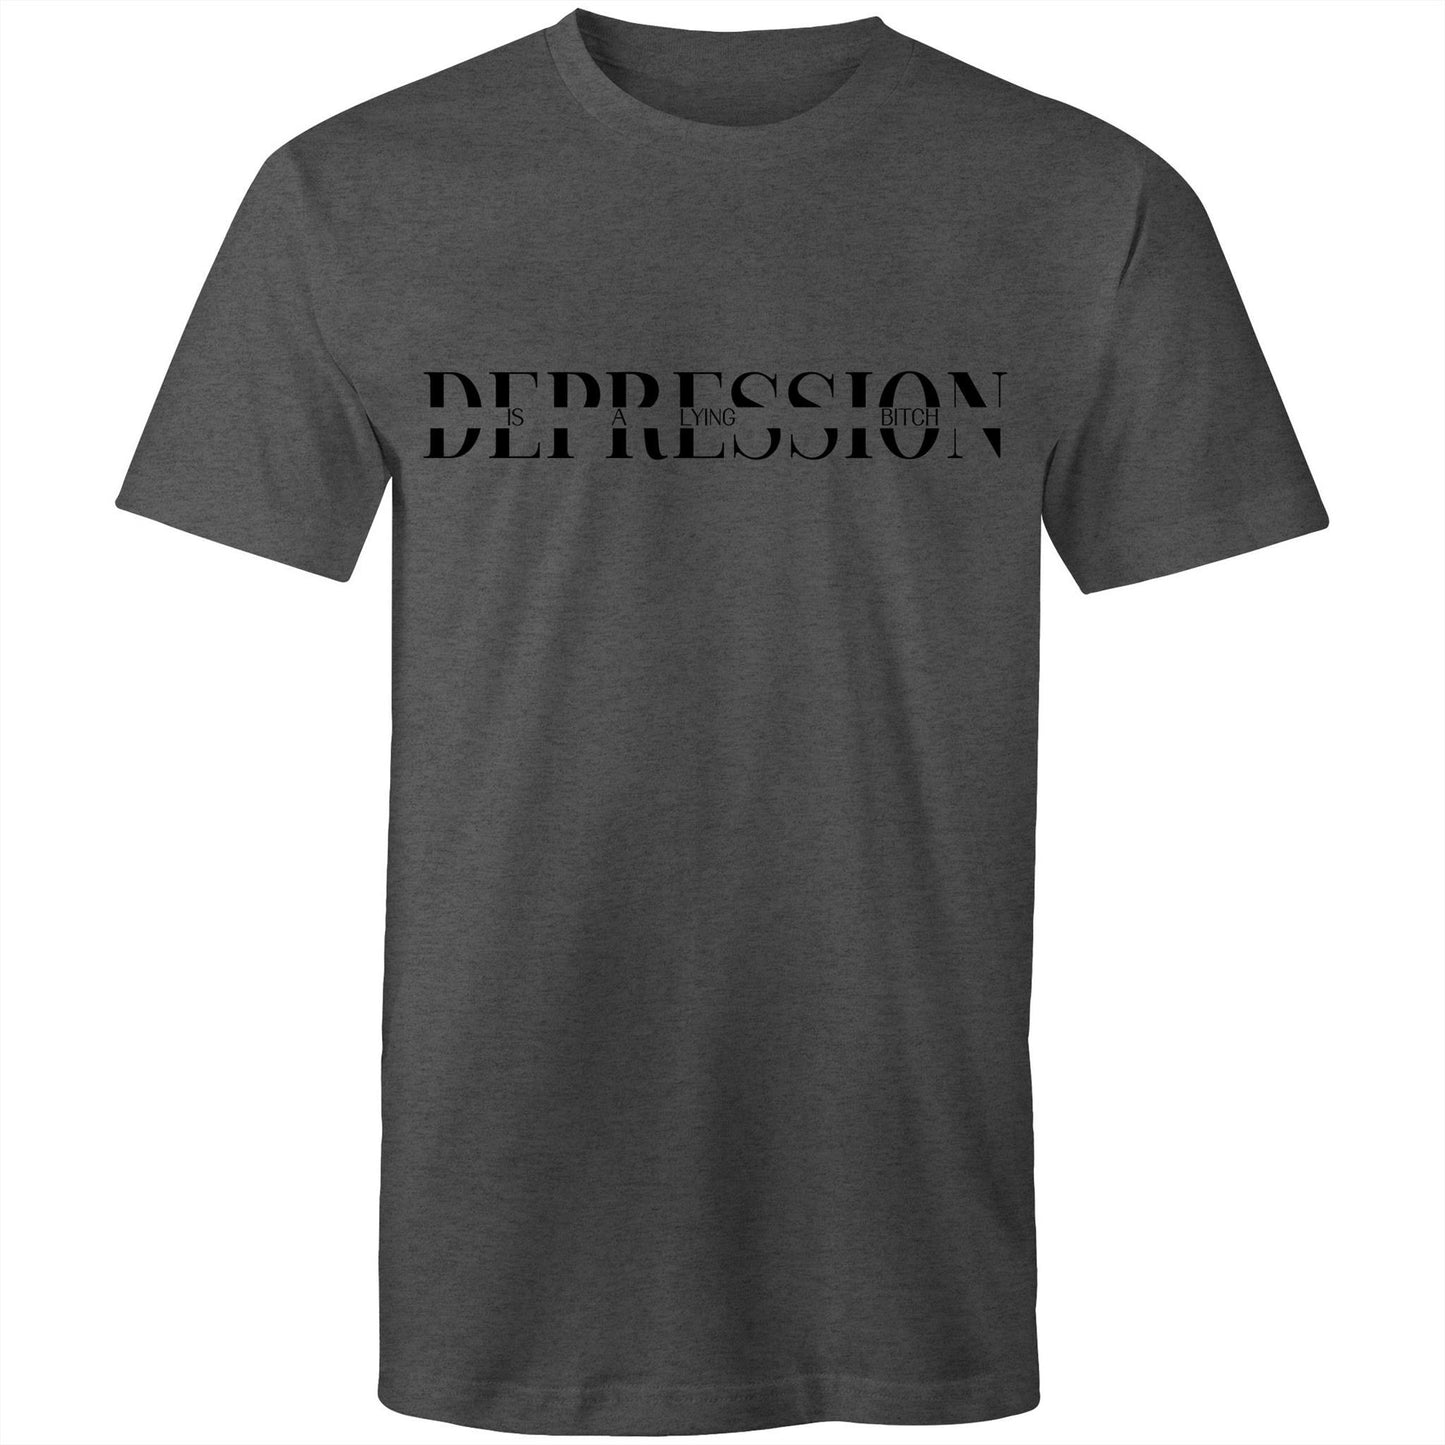 Mens T-Shirt - Depression is a lying B!tch